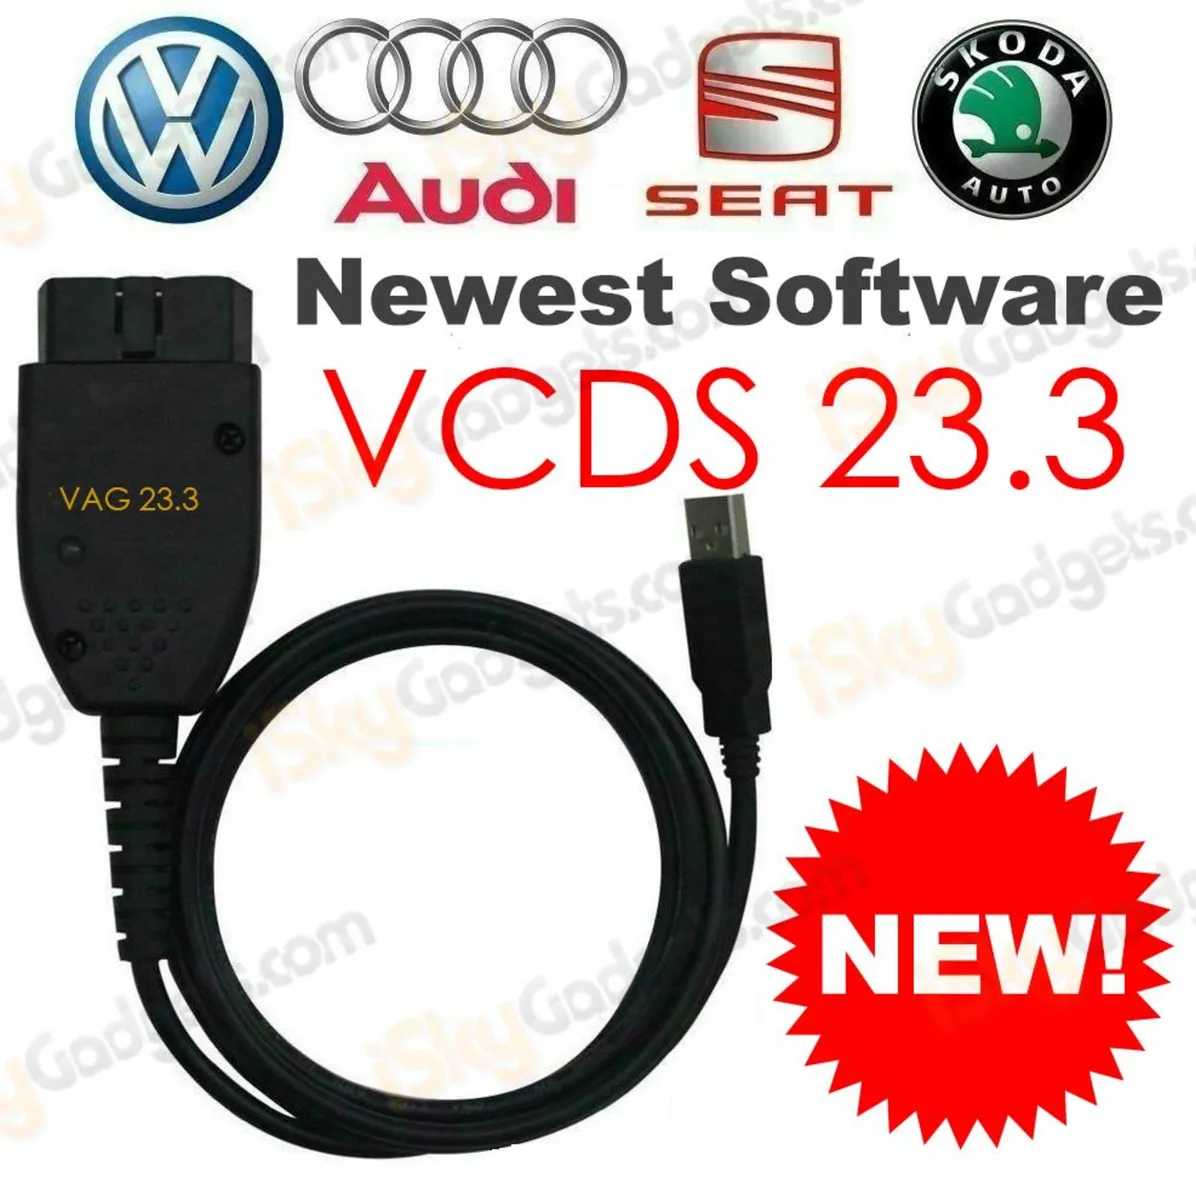 VAGCOM VCDS v23.3 Diagnostic Cable with Software